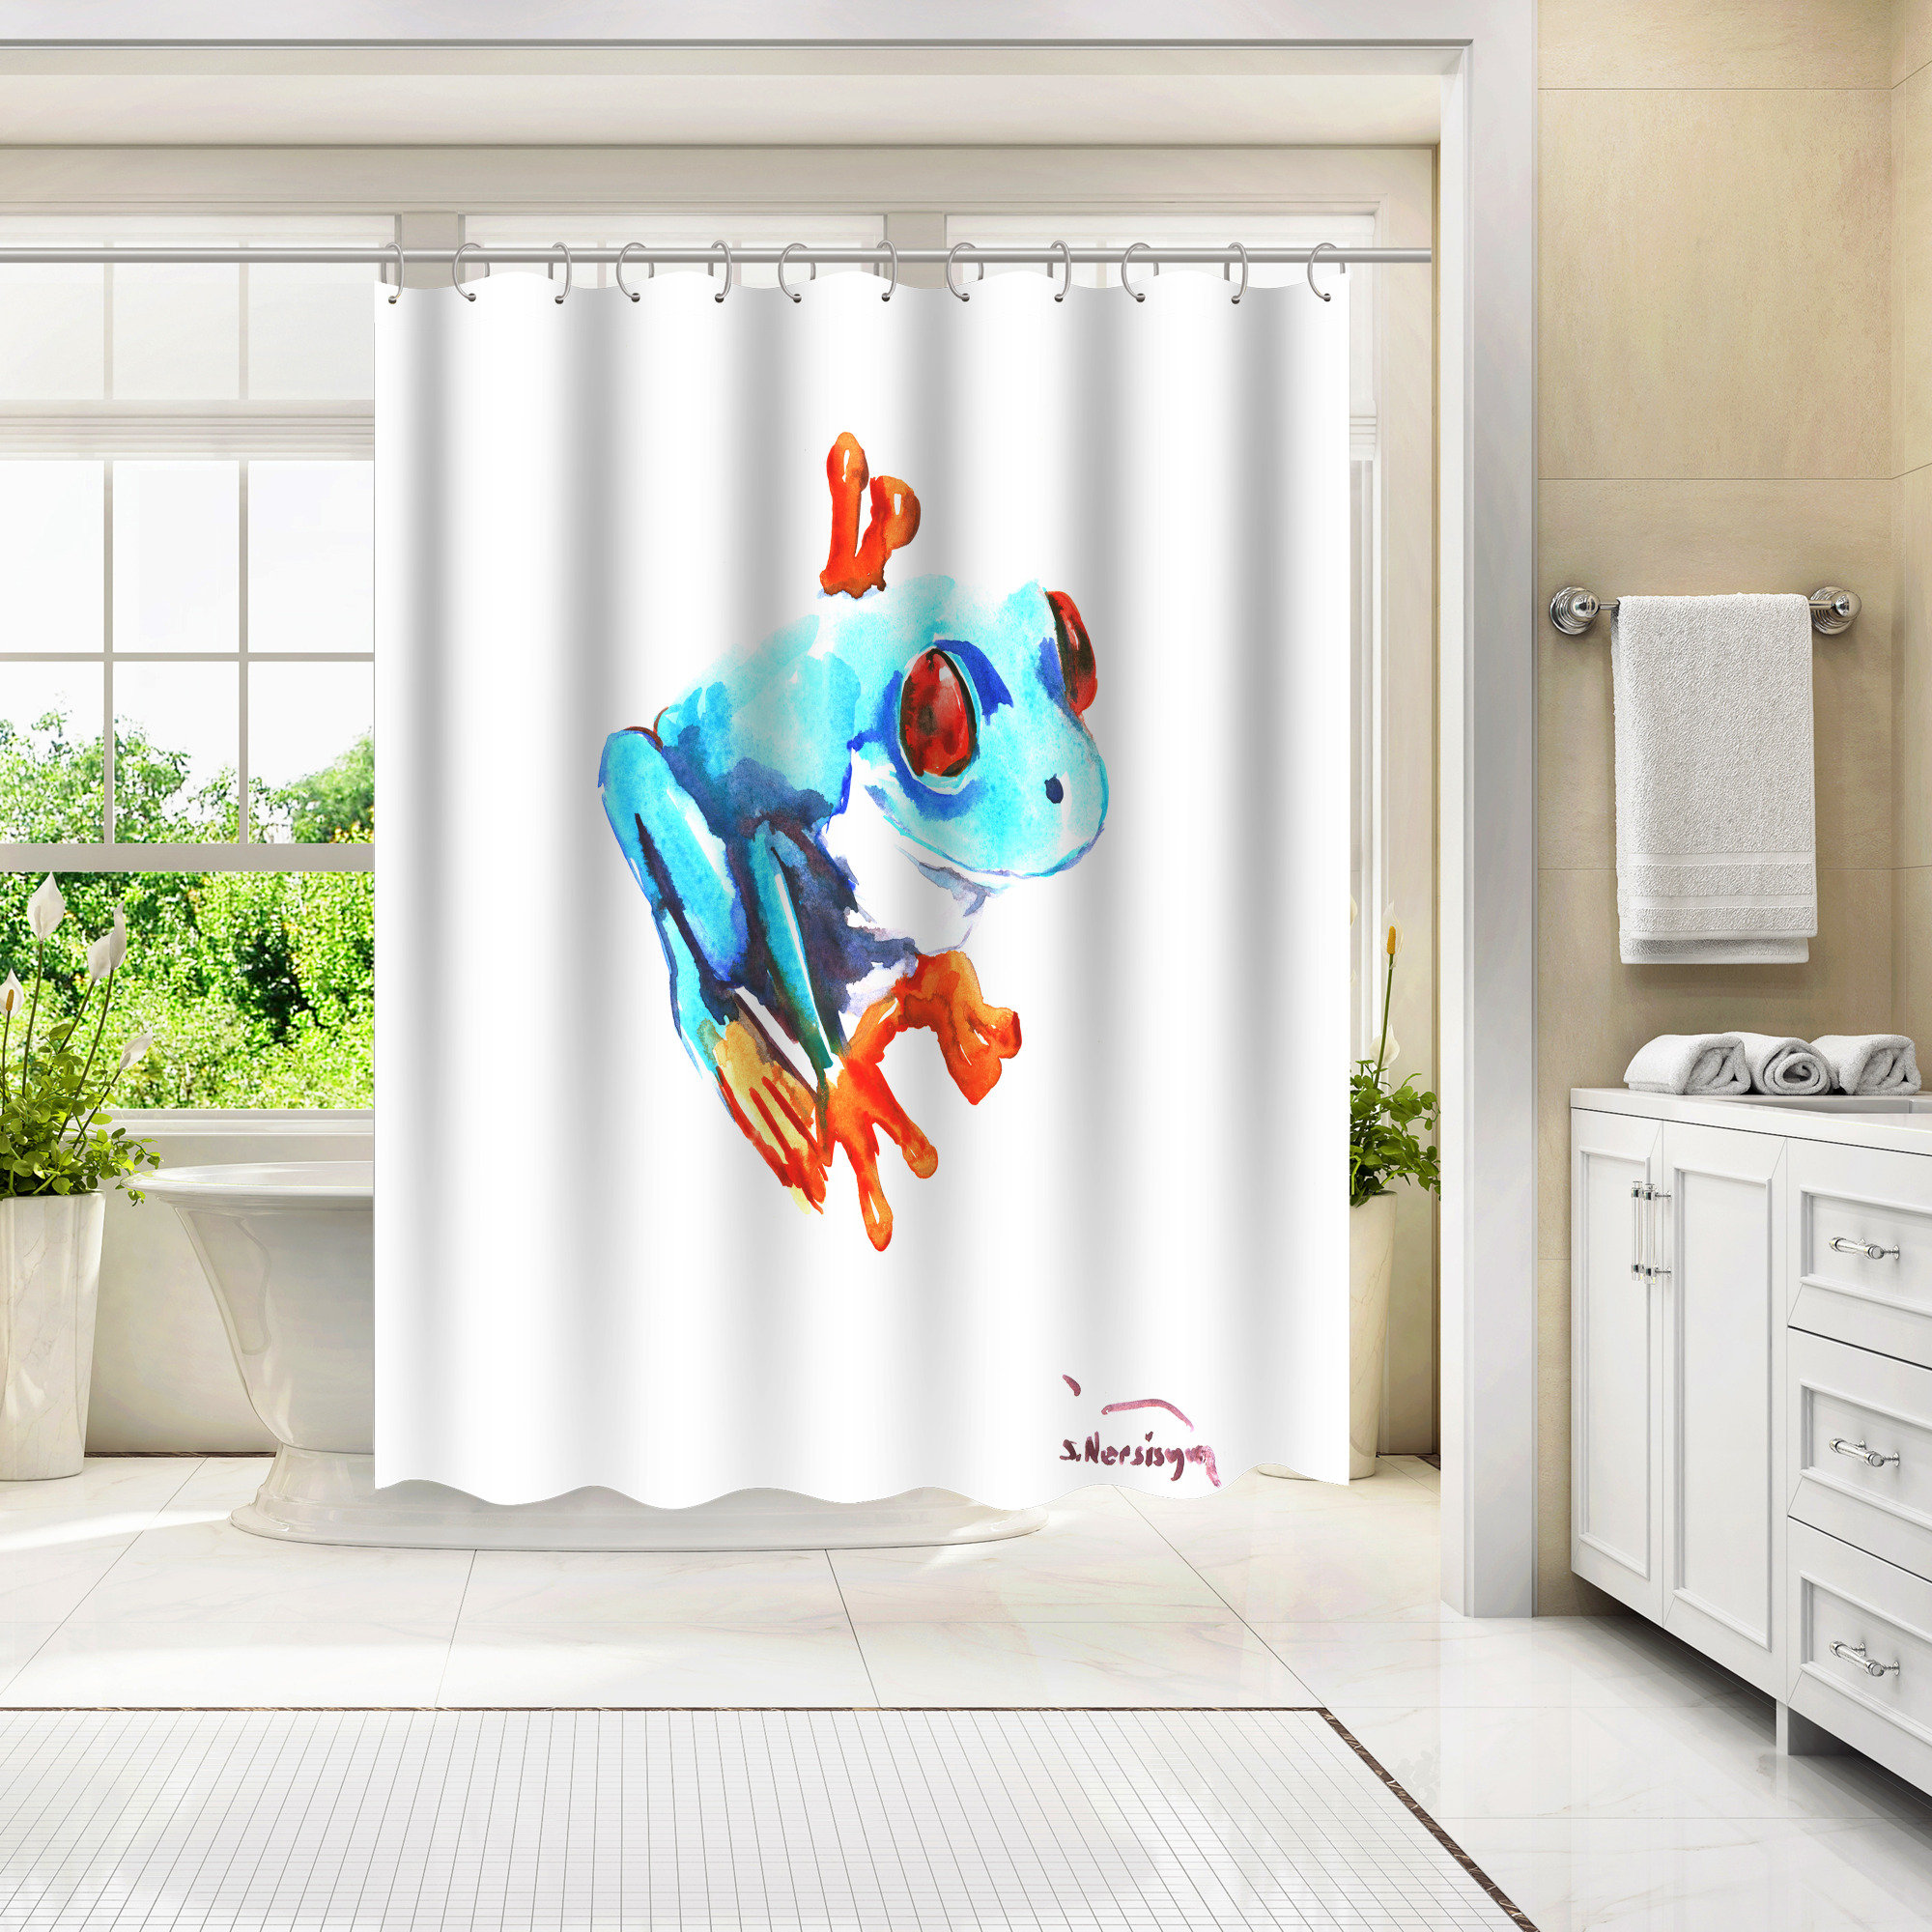 Americanflat 71 x 74 Shower Curtain, Frog by Suren Nersisyan